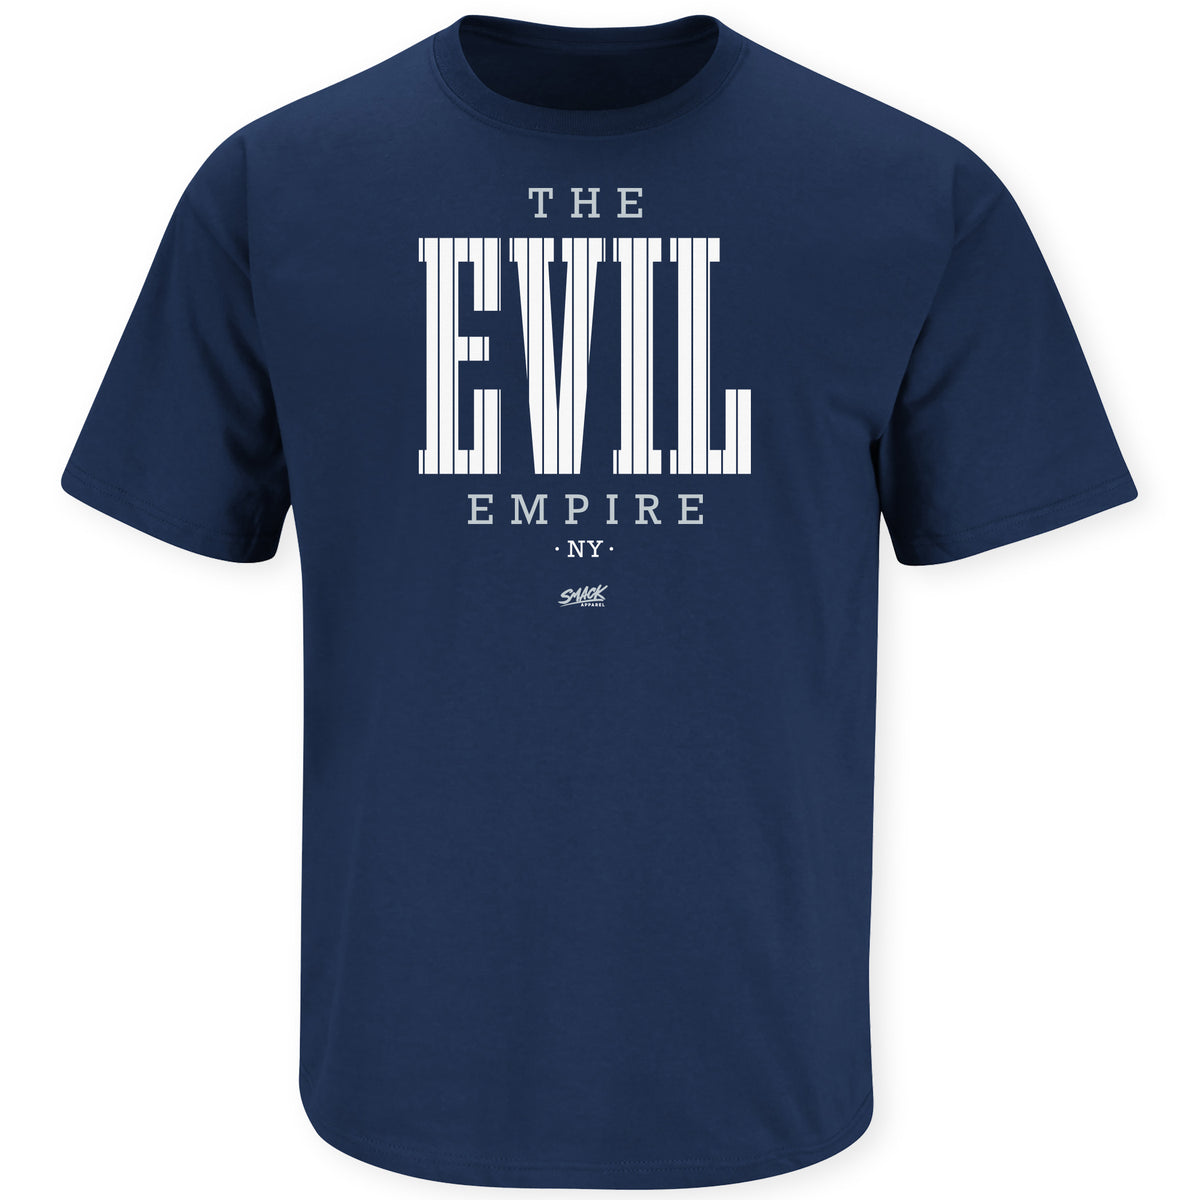 The Evil Empire T-Shirt for New York Baseball Fans (NYY) Smack Apparel